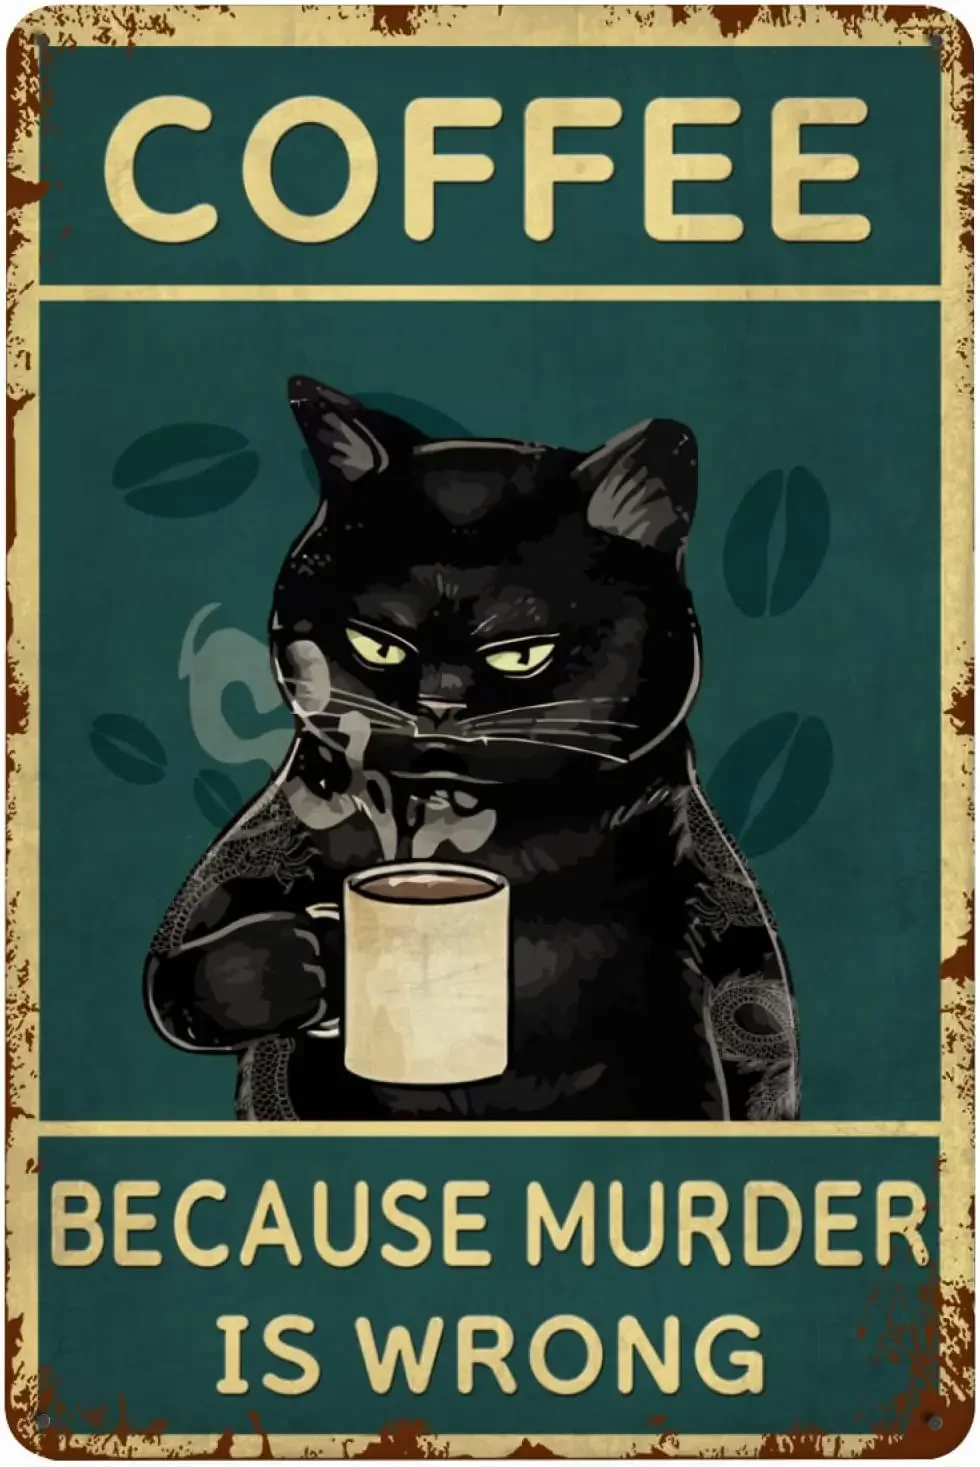 

Coffee Because Murder Is Wrong Black Cat Decoration Art Tin Vintage Sign for Home Kitchen Bathroom Farm Garden Garage